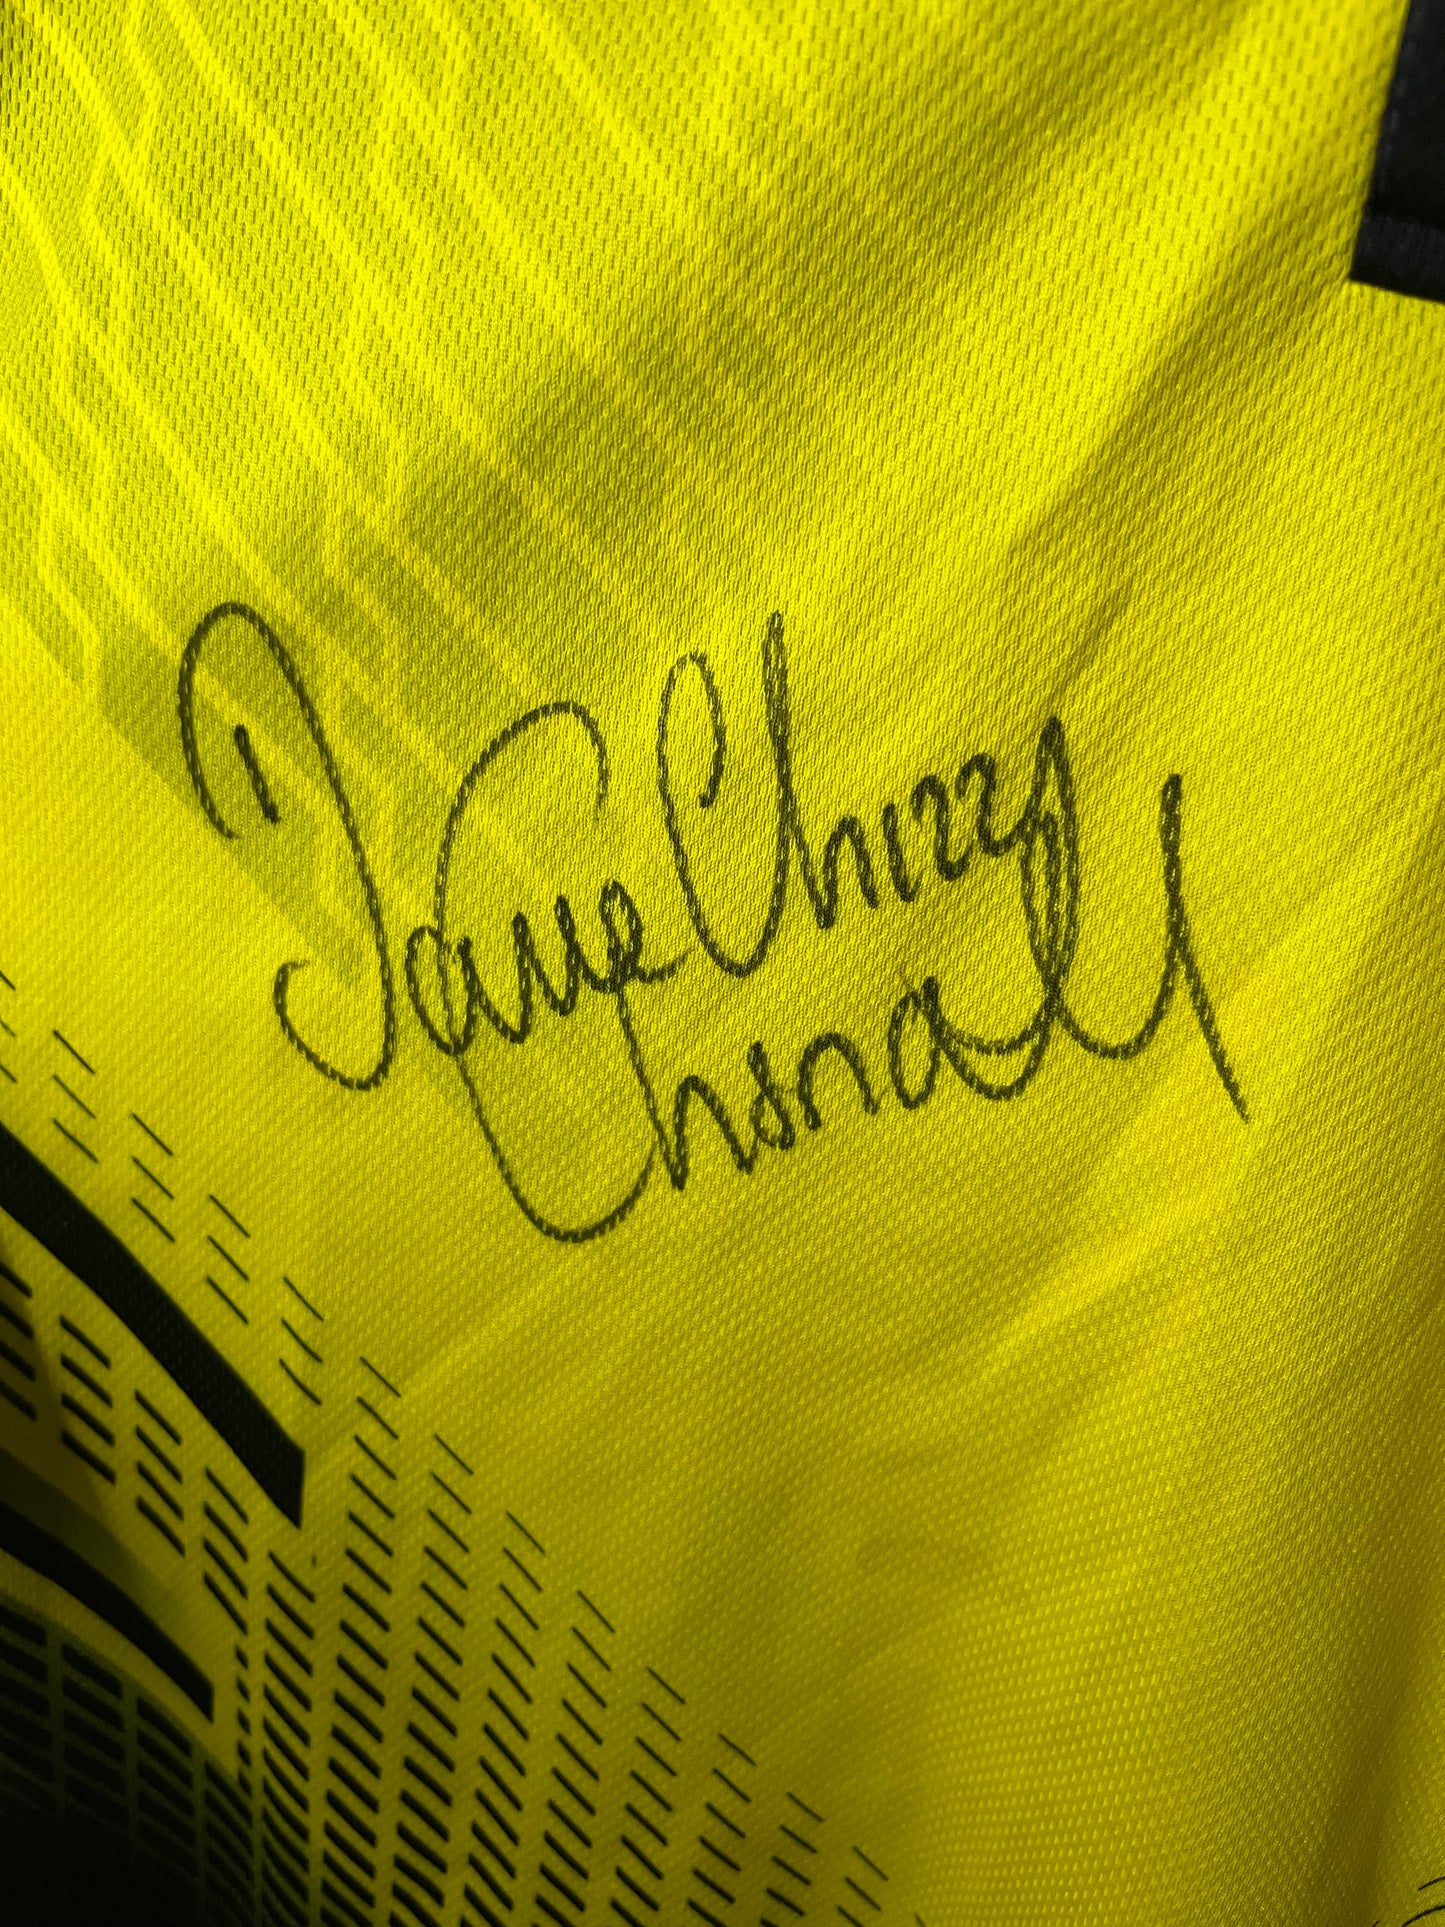 Dave Chisnall | Doppelt Signiertes Shirt | Größe M